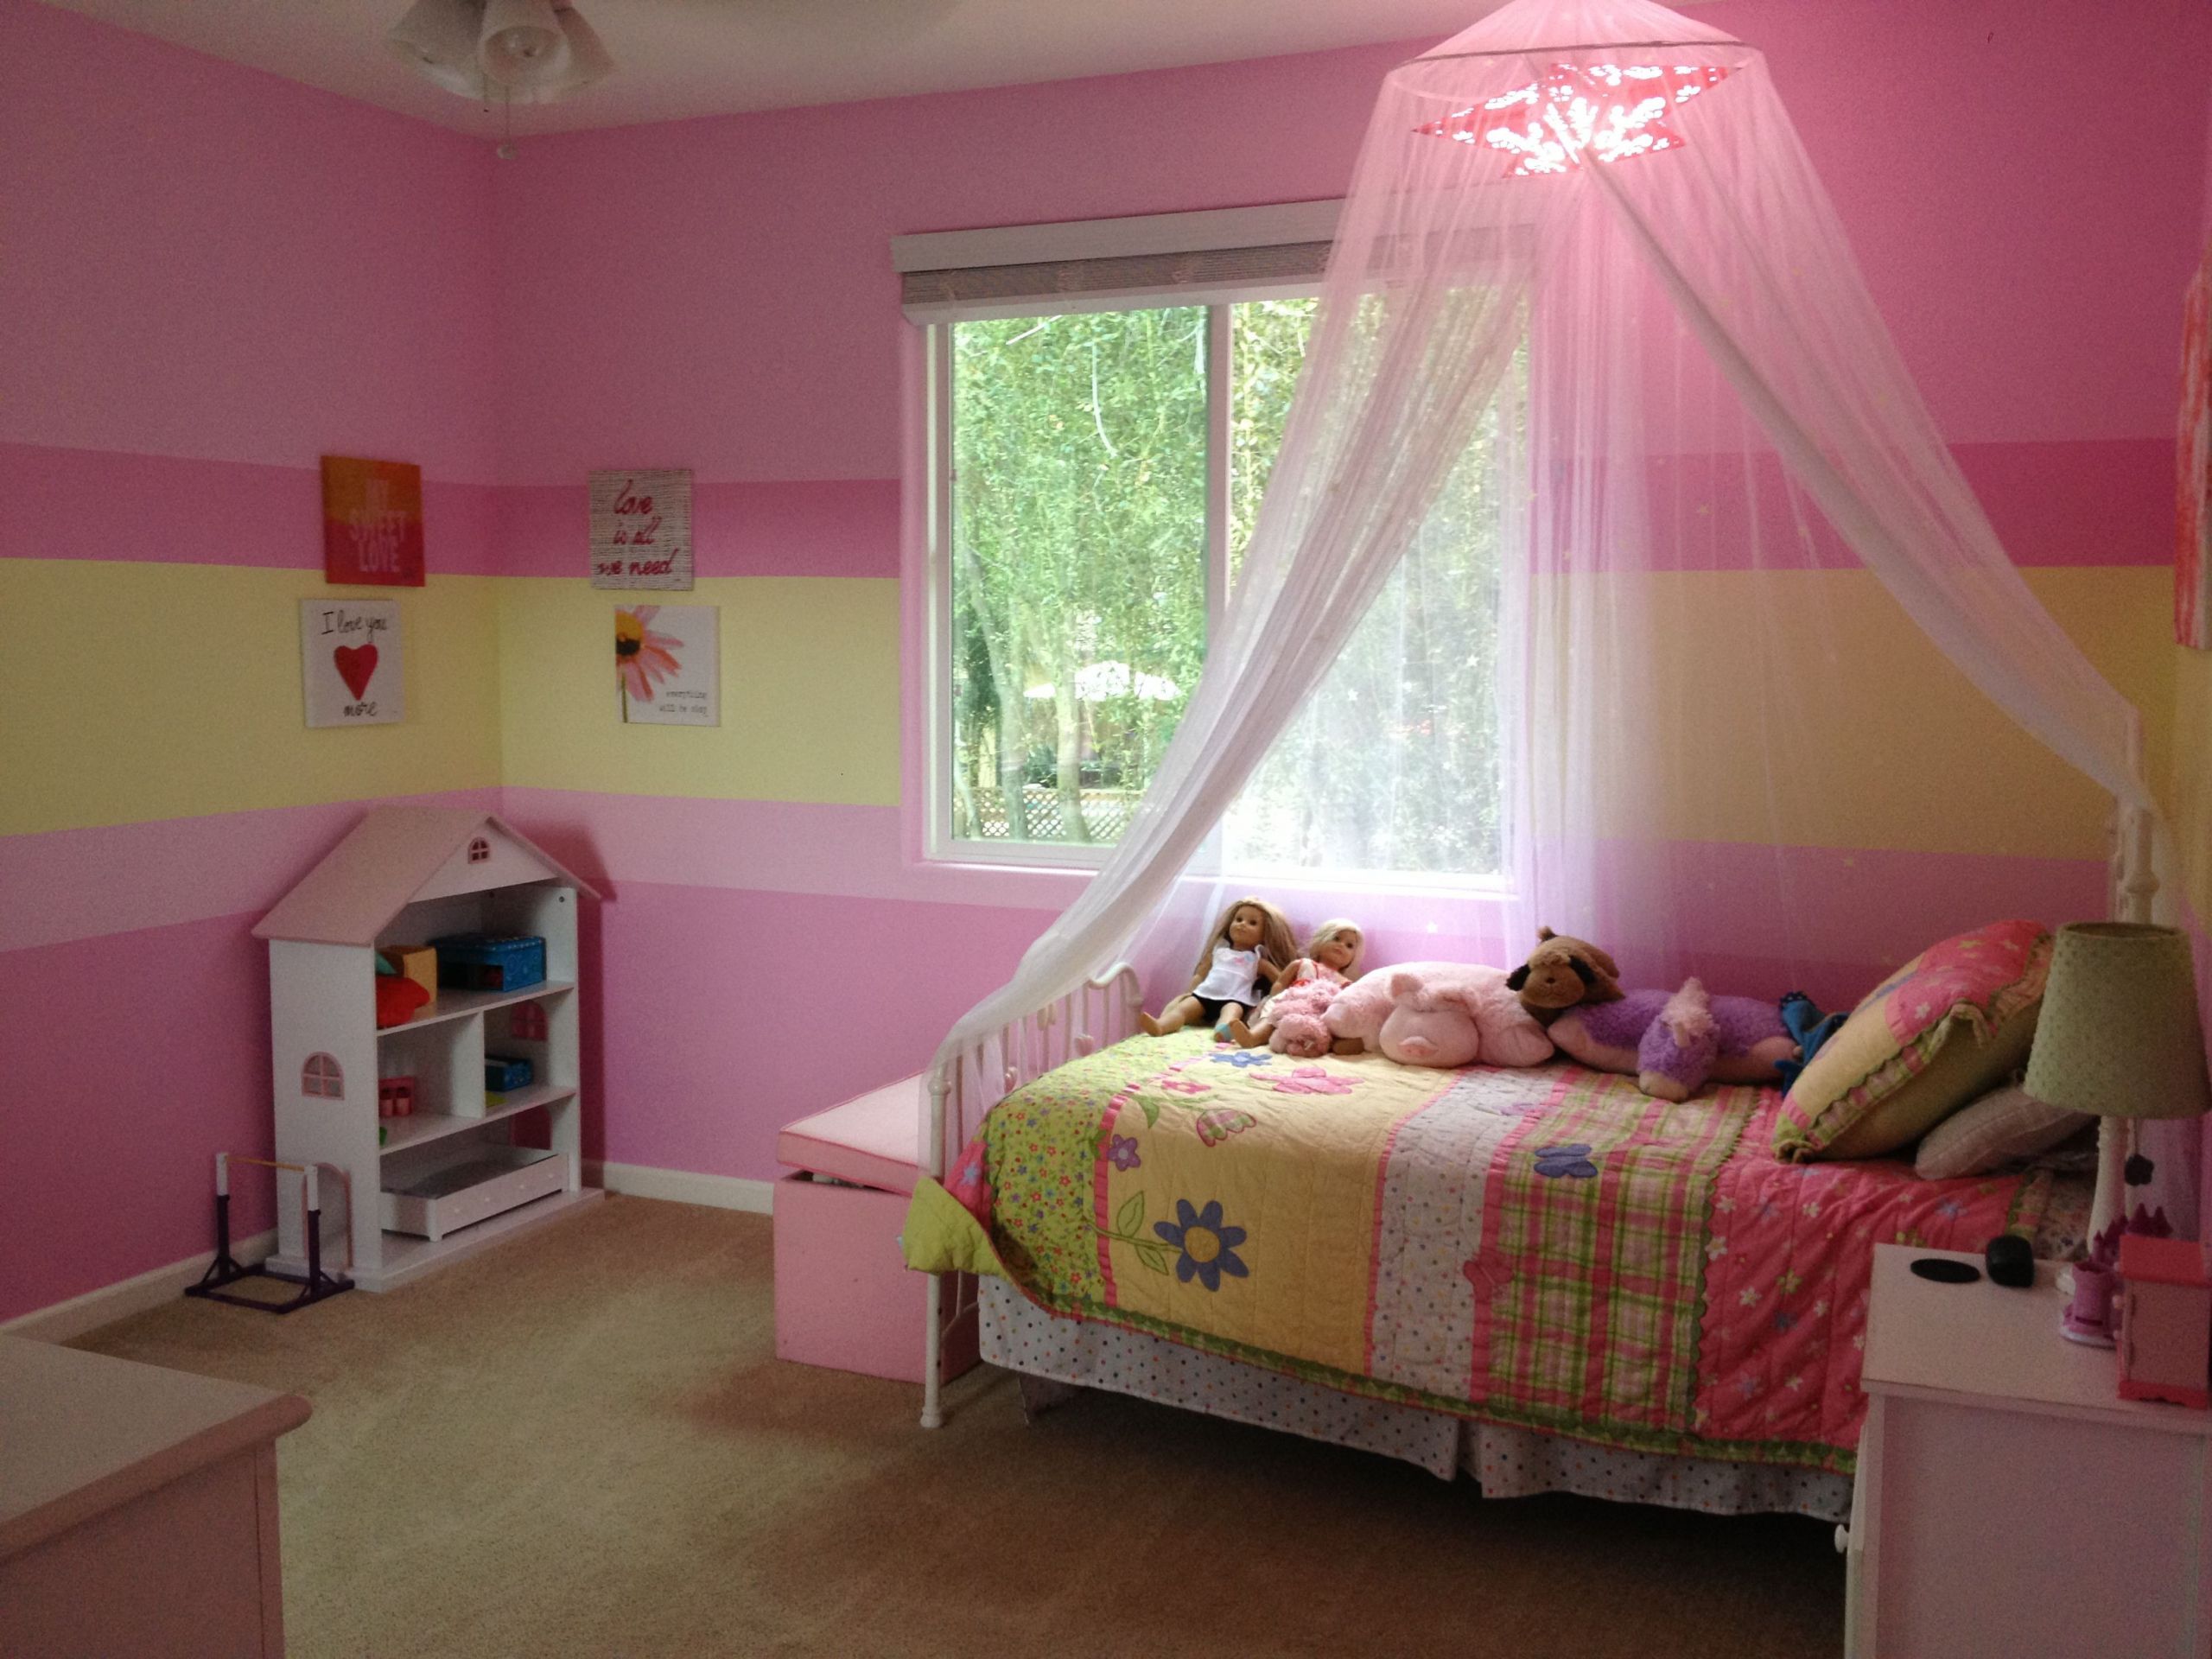 Girls Bedroom Paint
 Best 25 Girl bedroom paint ideas on Pinterest